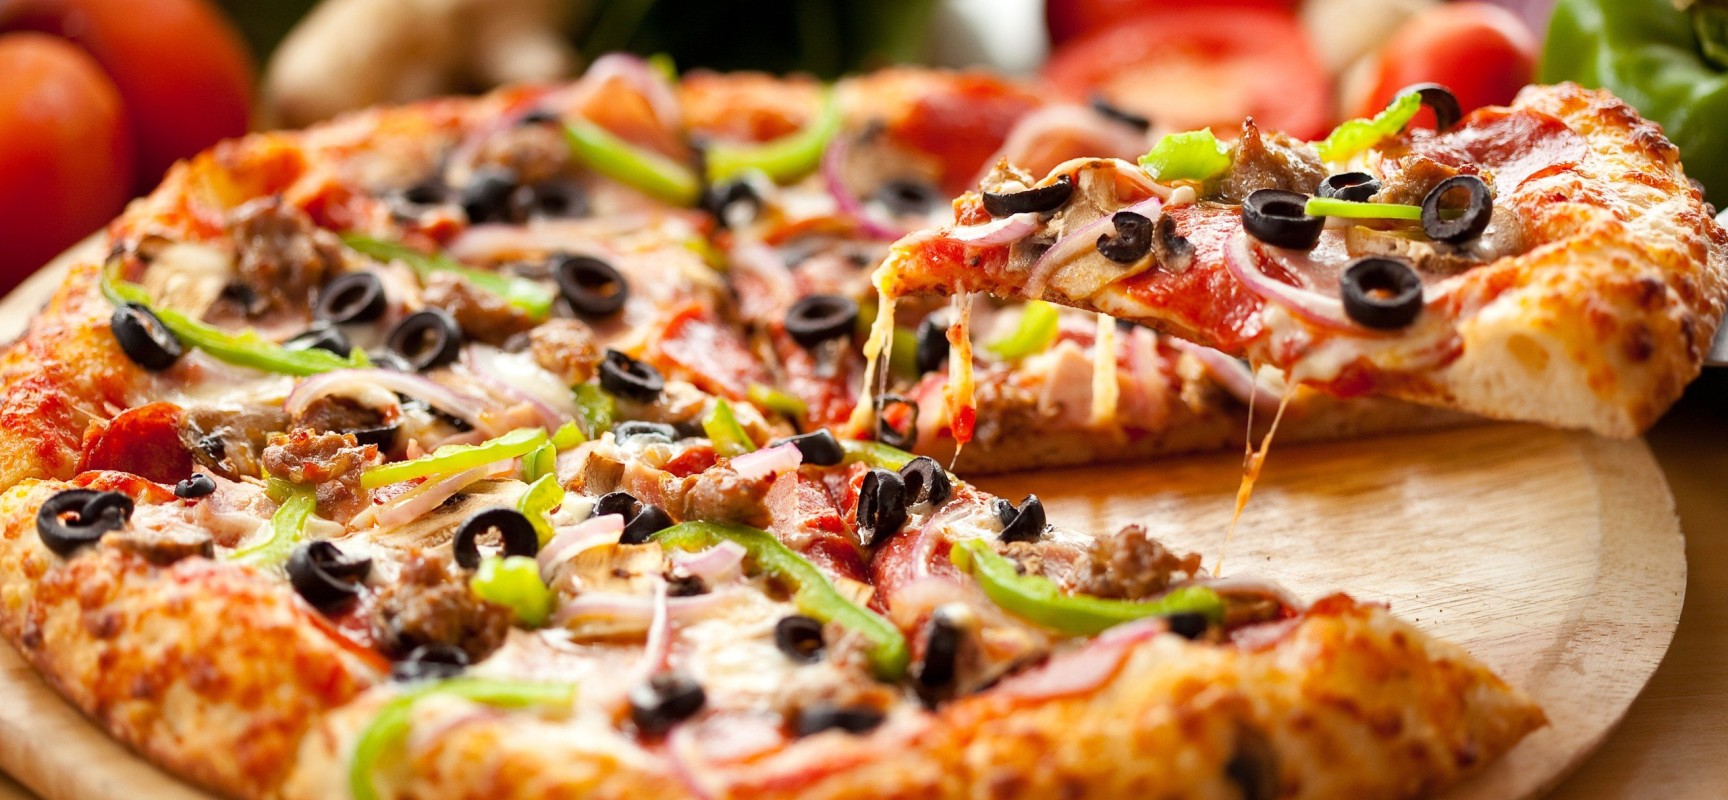 Let’s Make a Healthier Pizza